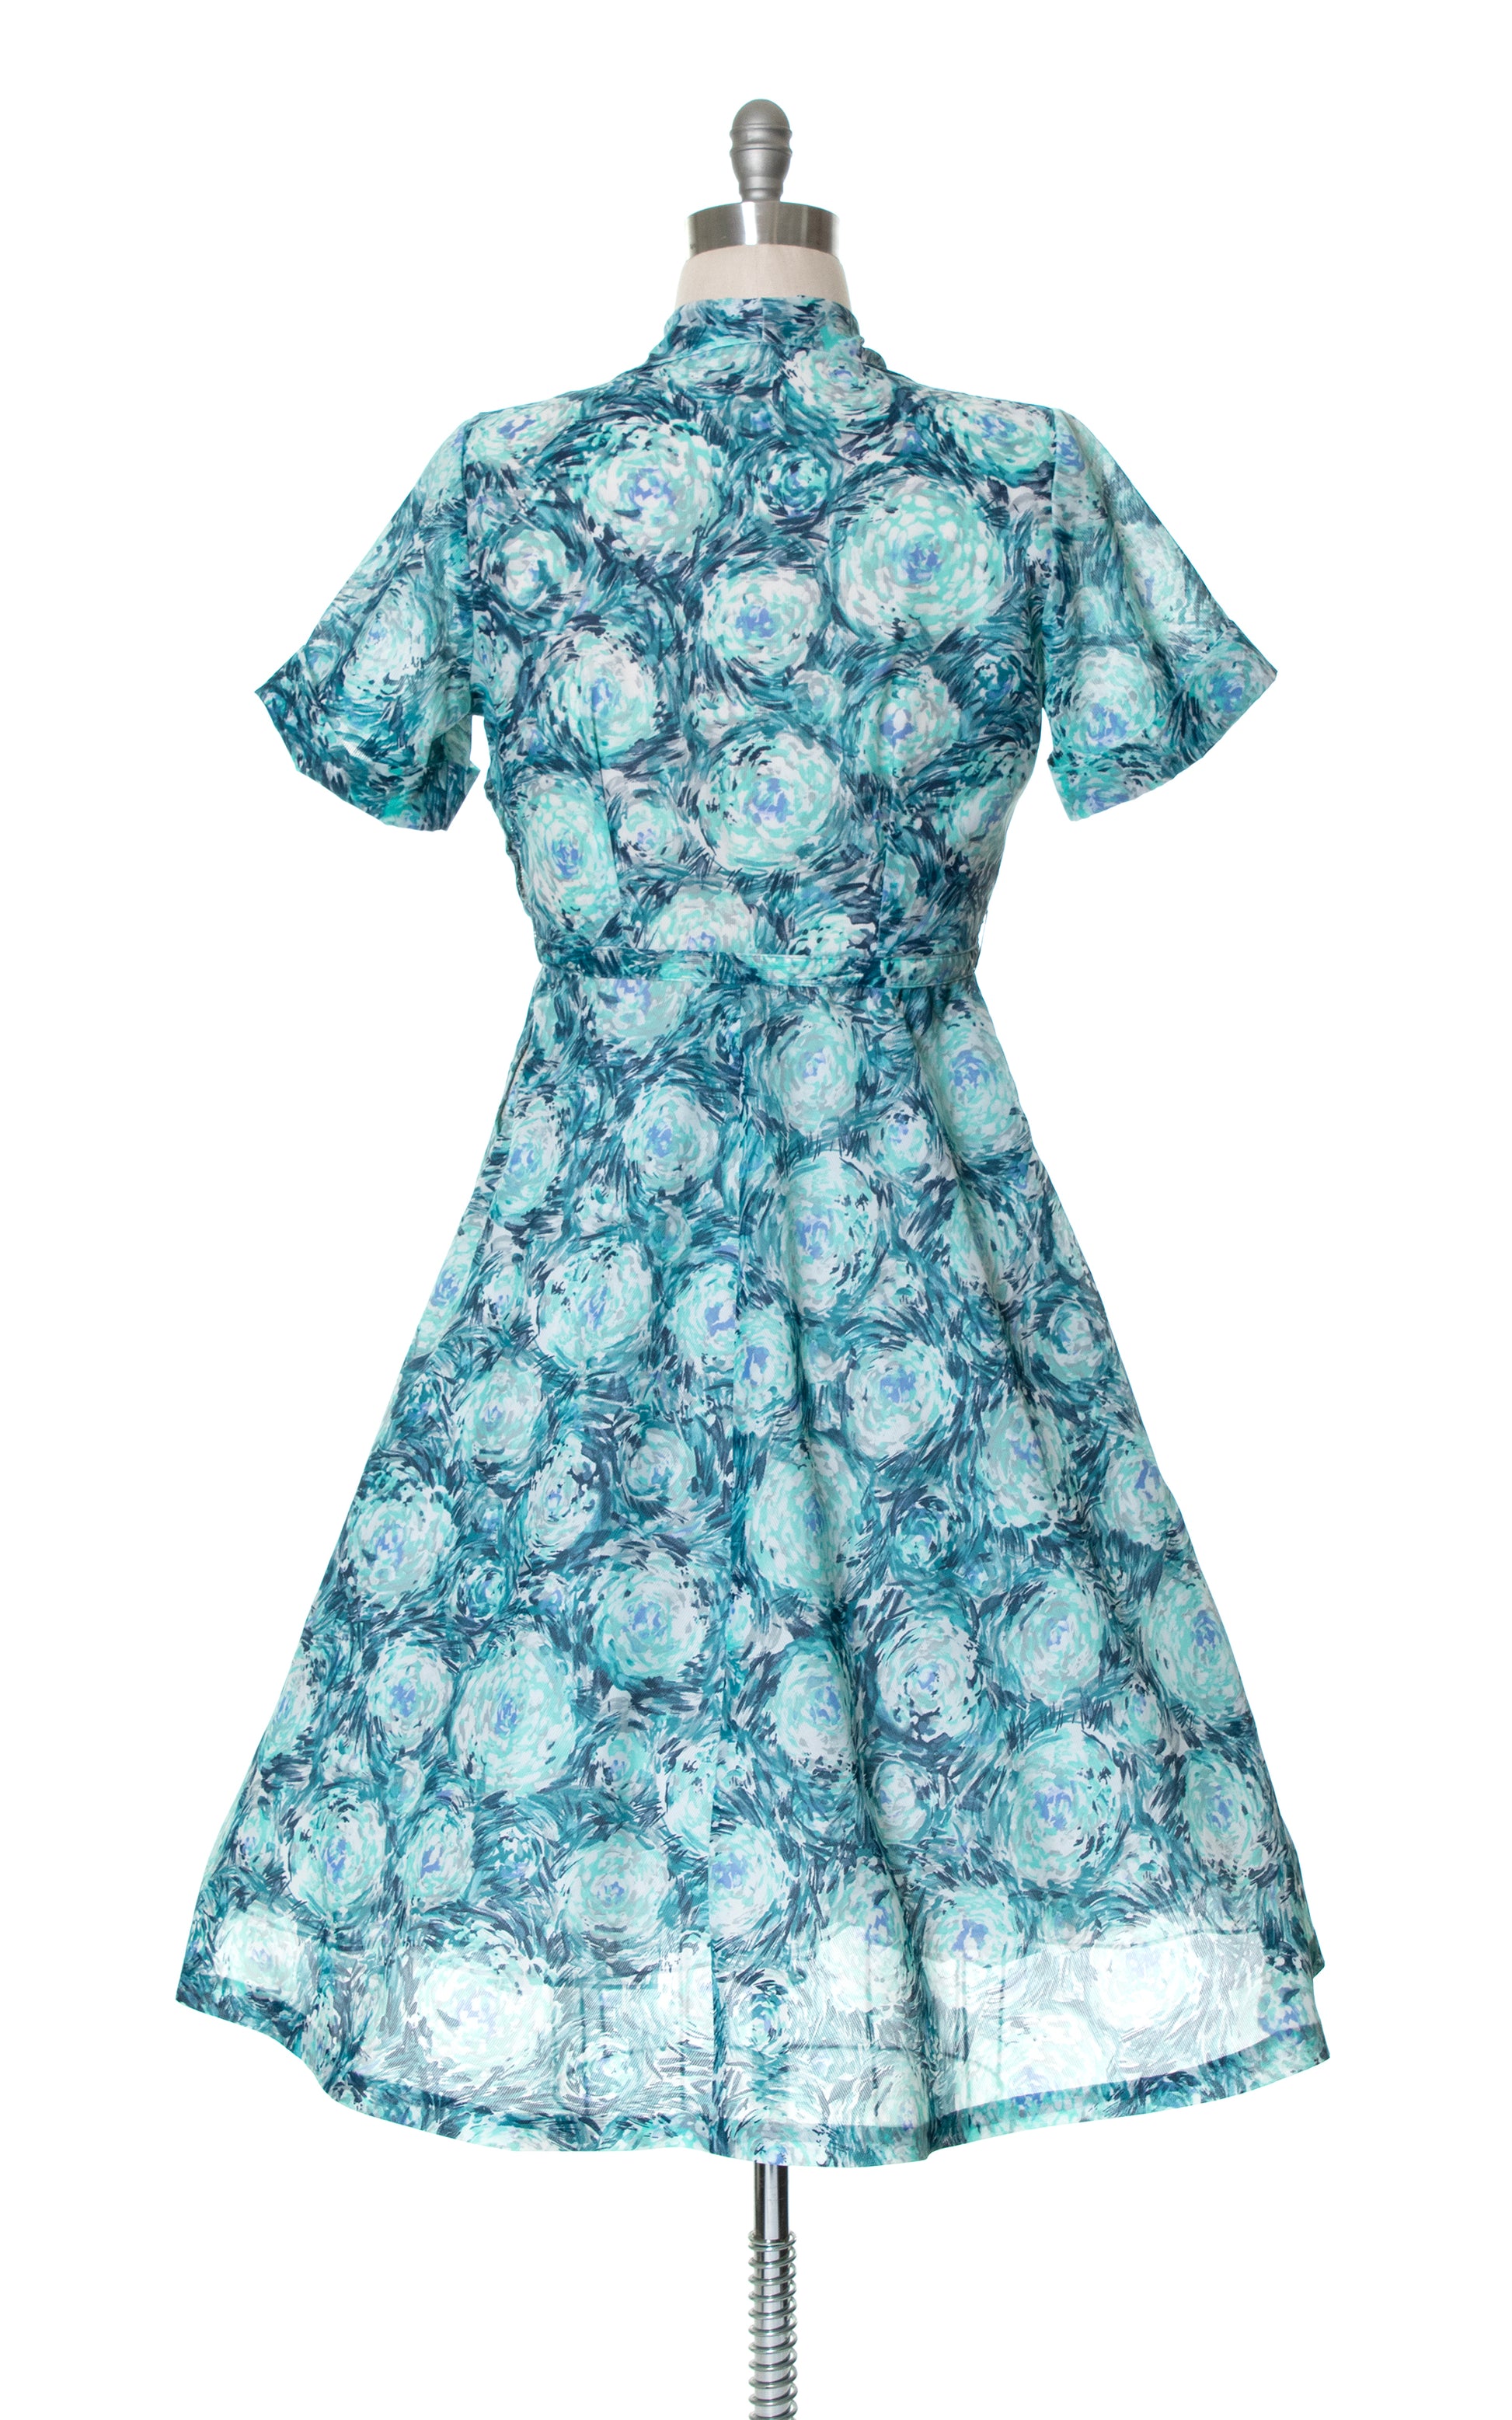 Vintage 50s 1950s Blue Sheer Floral Shirtwaist Dress Fit and Flare BirthdayLifeVintage